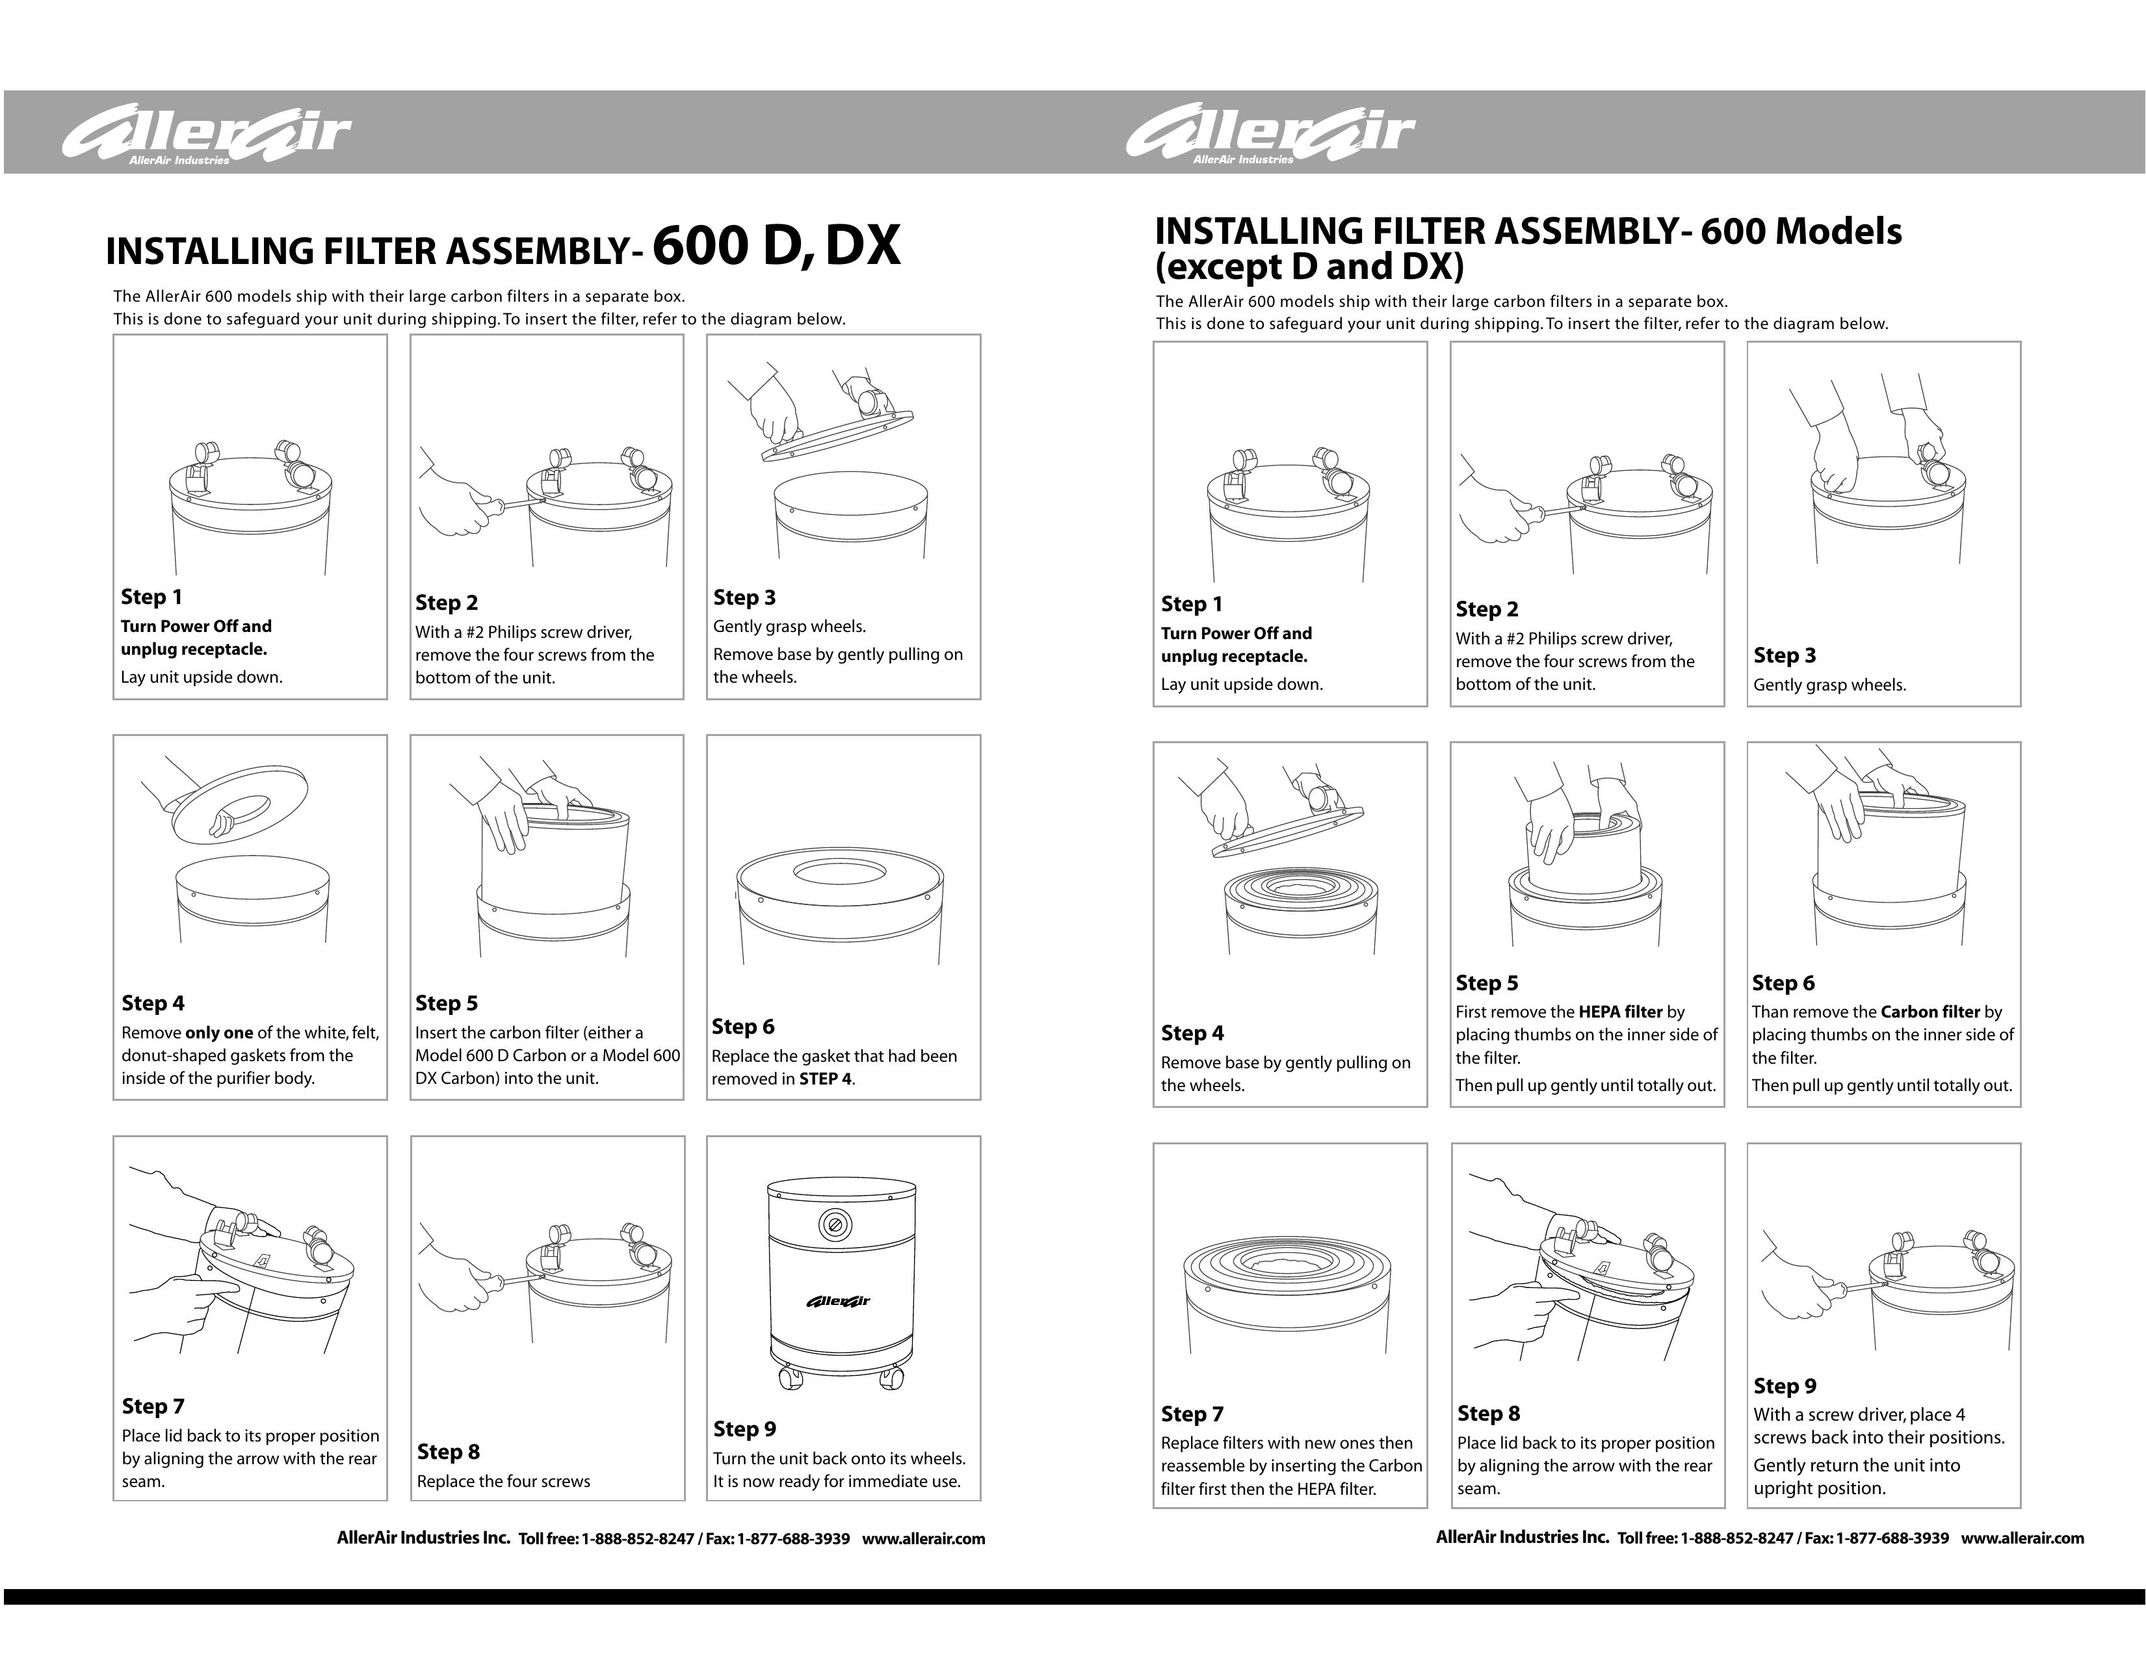 AllerAir 600 DX Air Cleaner User Manual